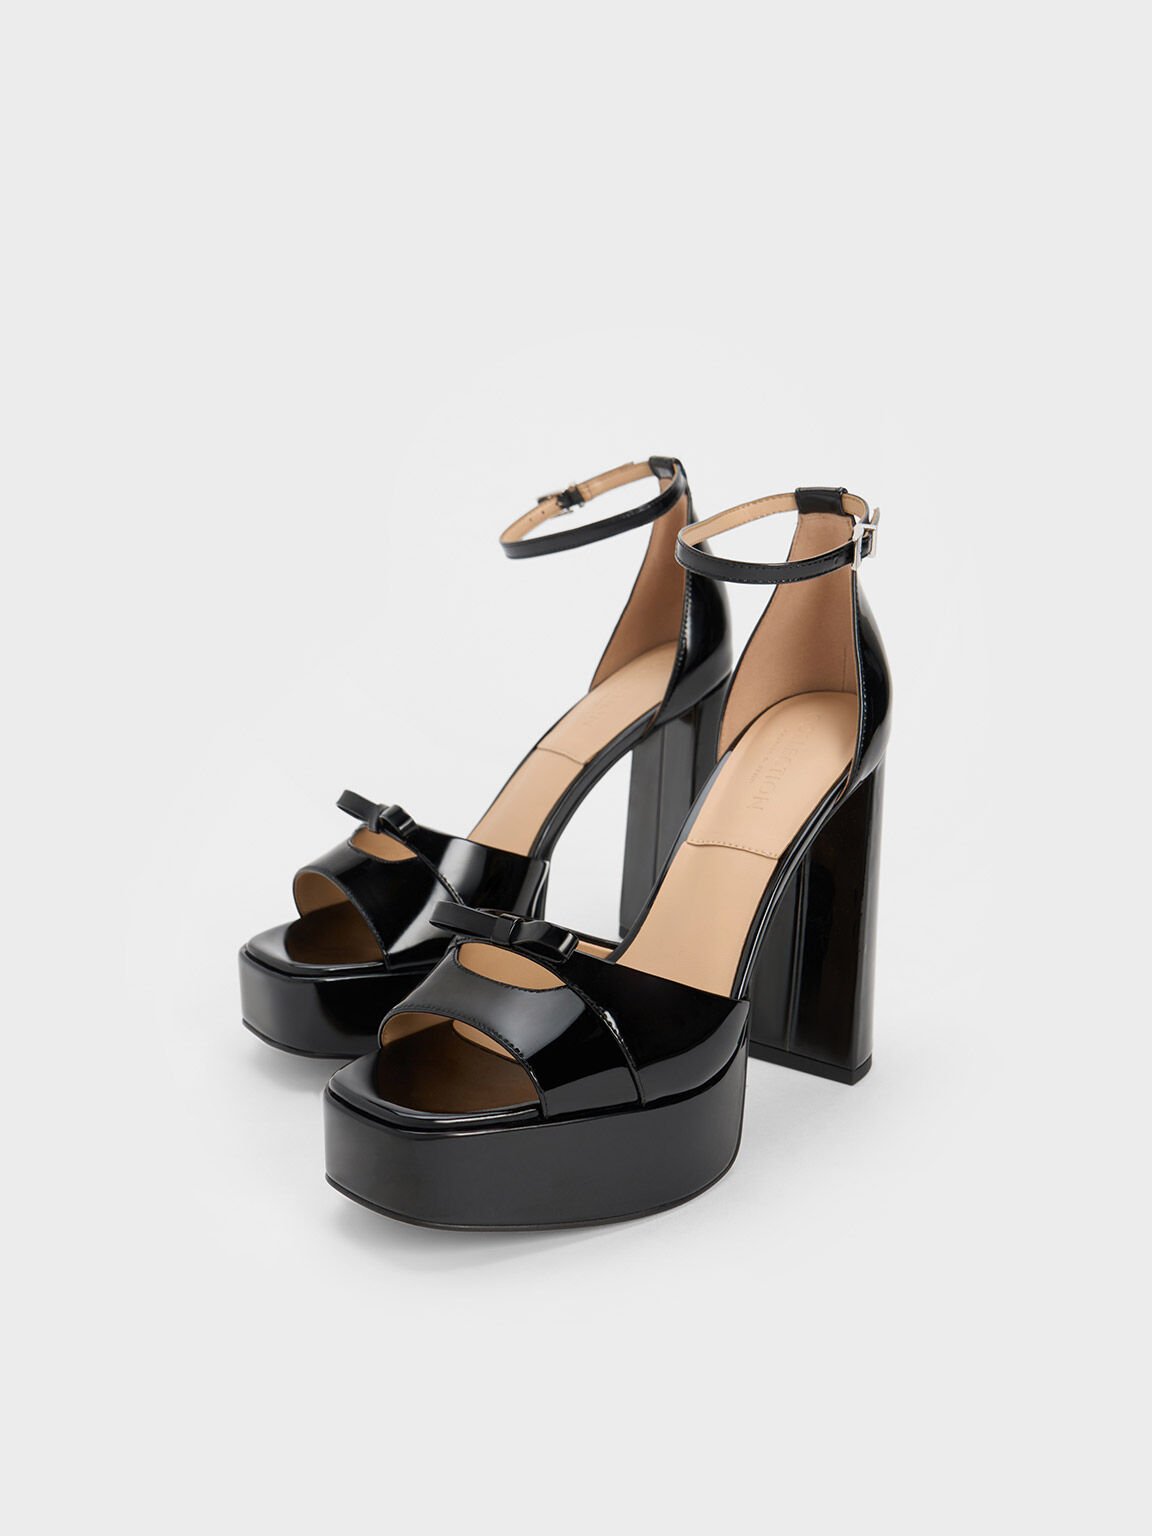 Verona Patent Leather Platform Sandals, Black, hi-res